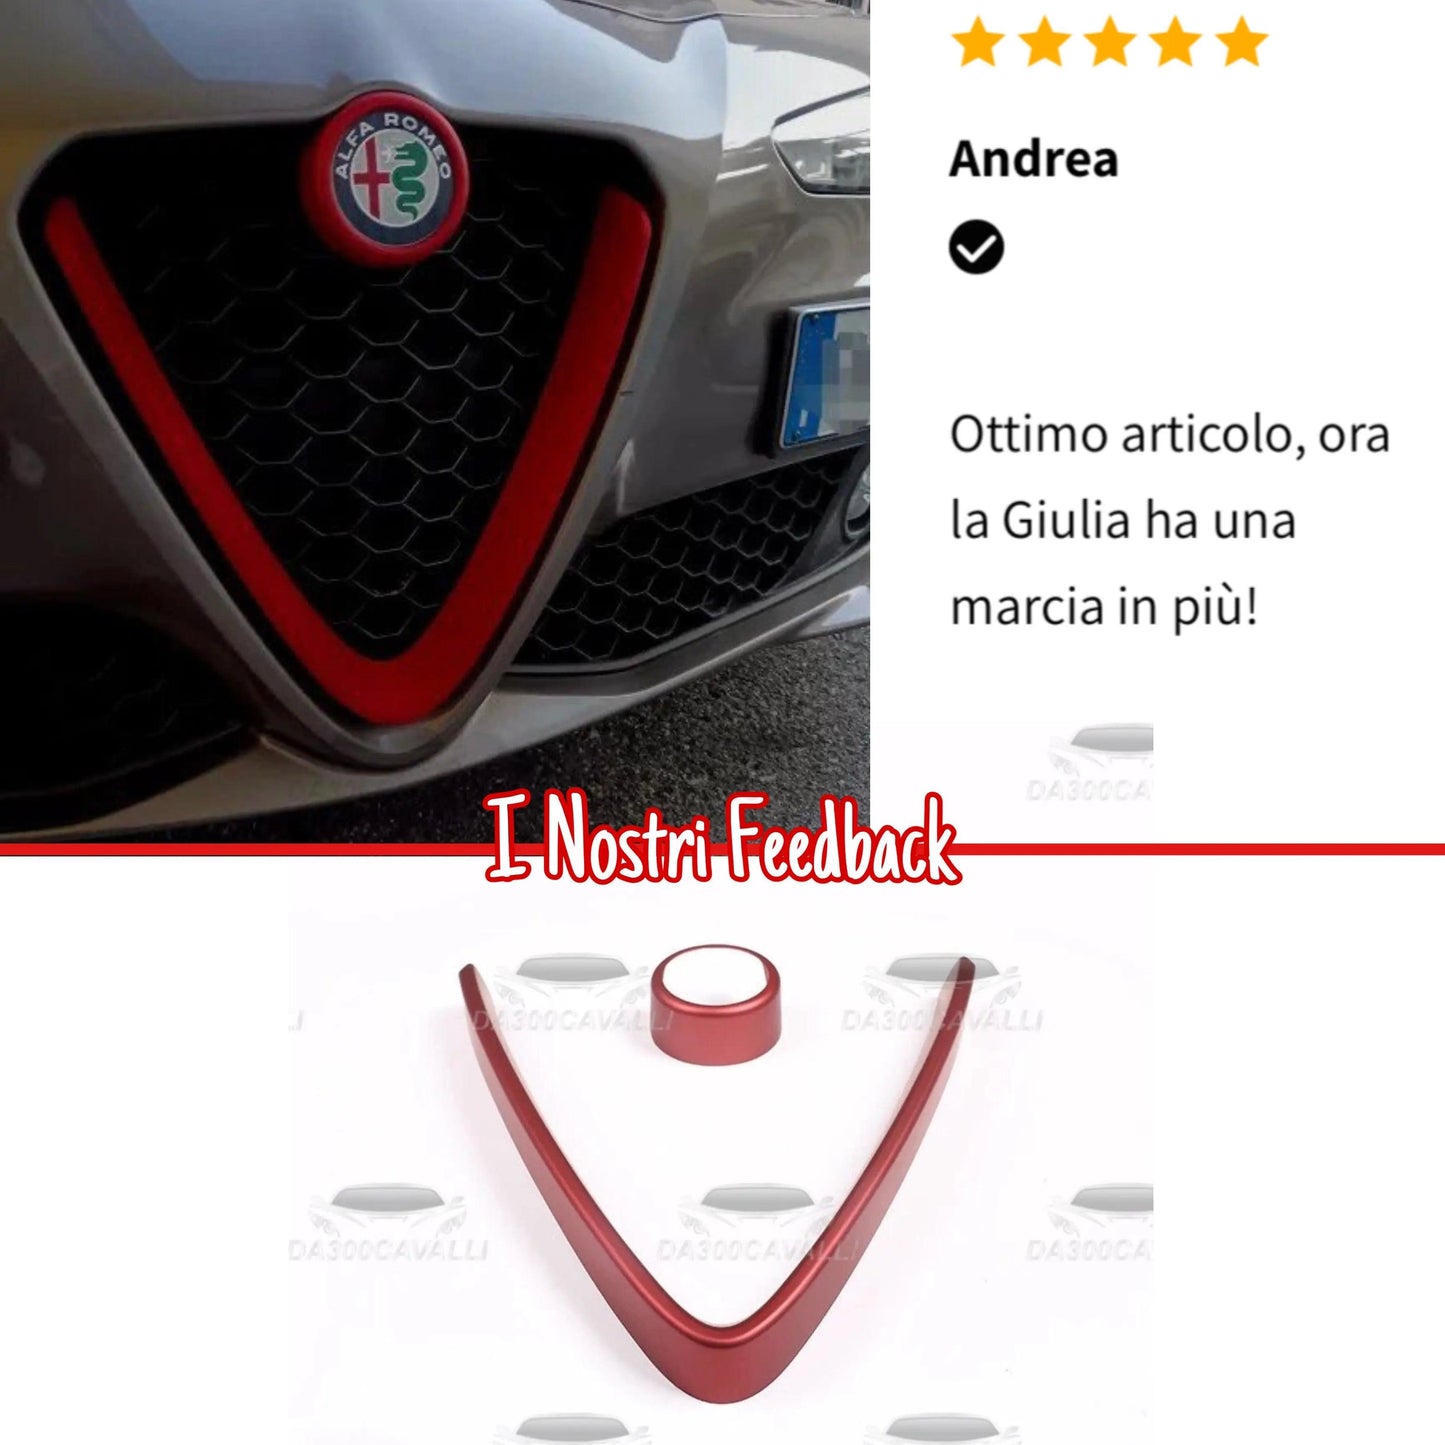 Mascherina Alfa Romeo Giulia E Stelvio (2017-2023) - Da300Cavalli